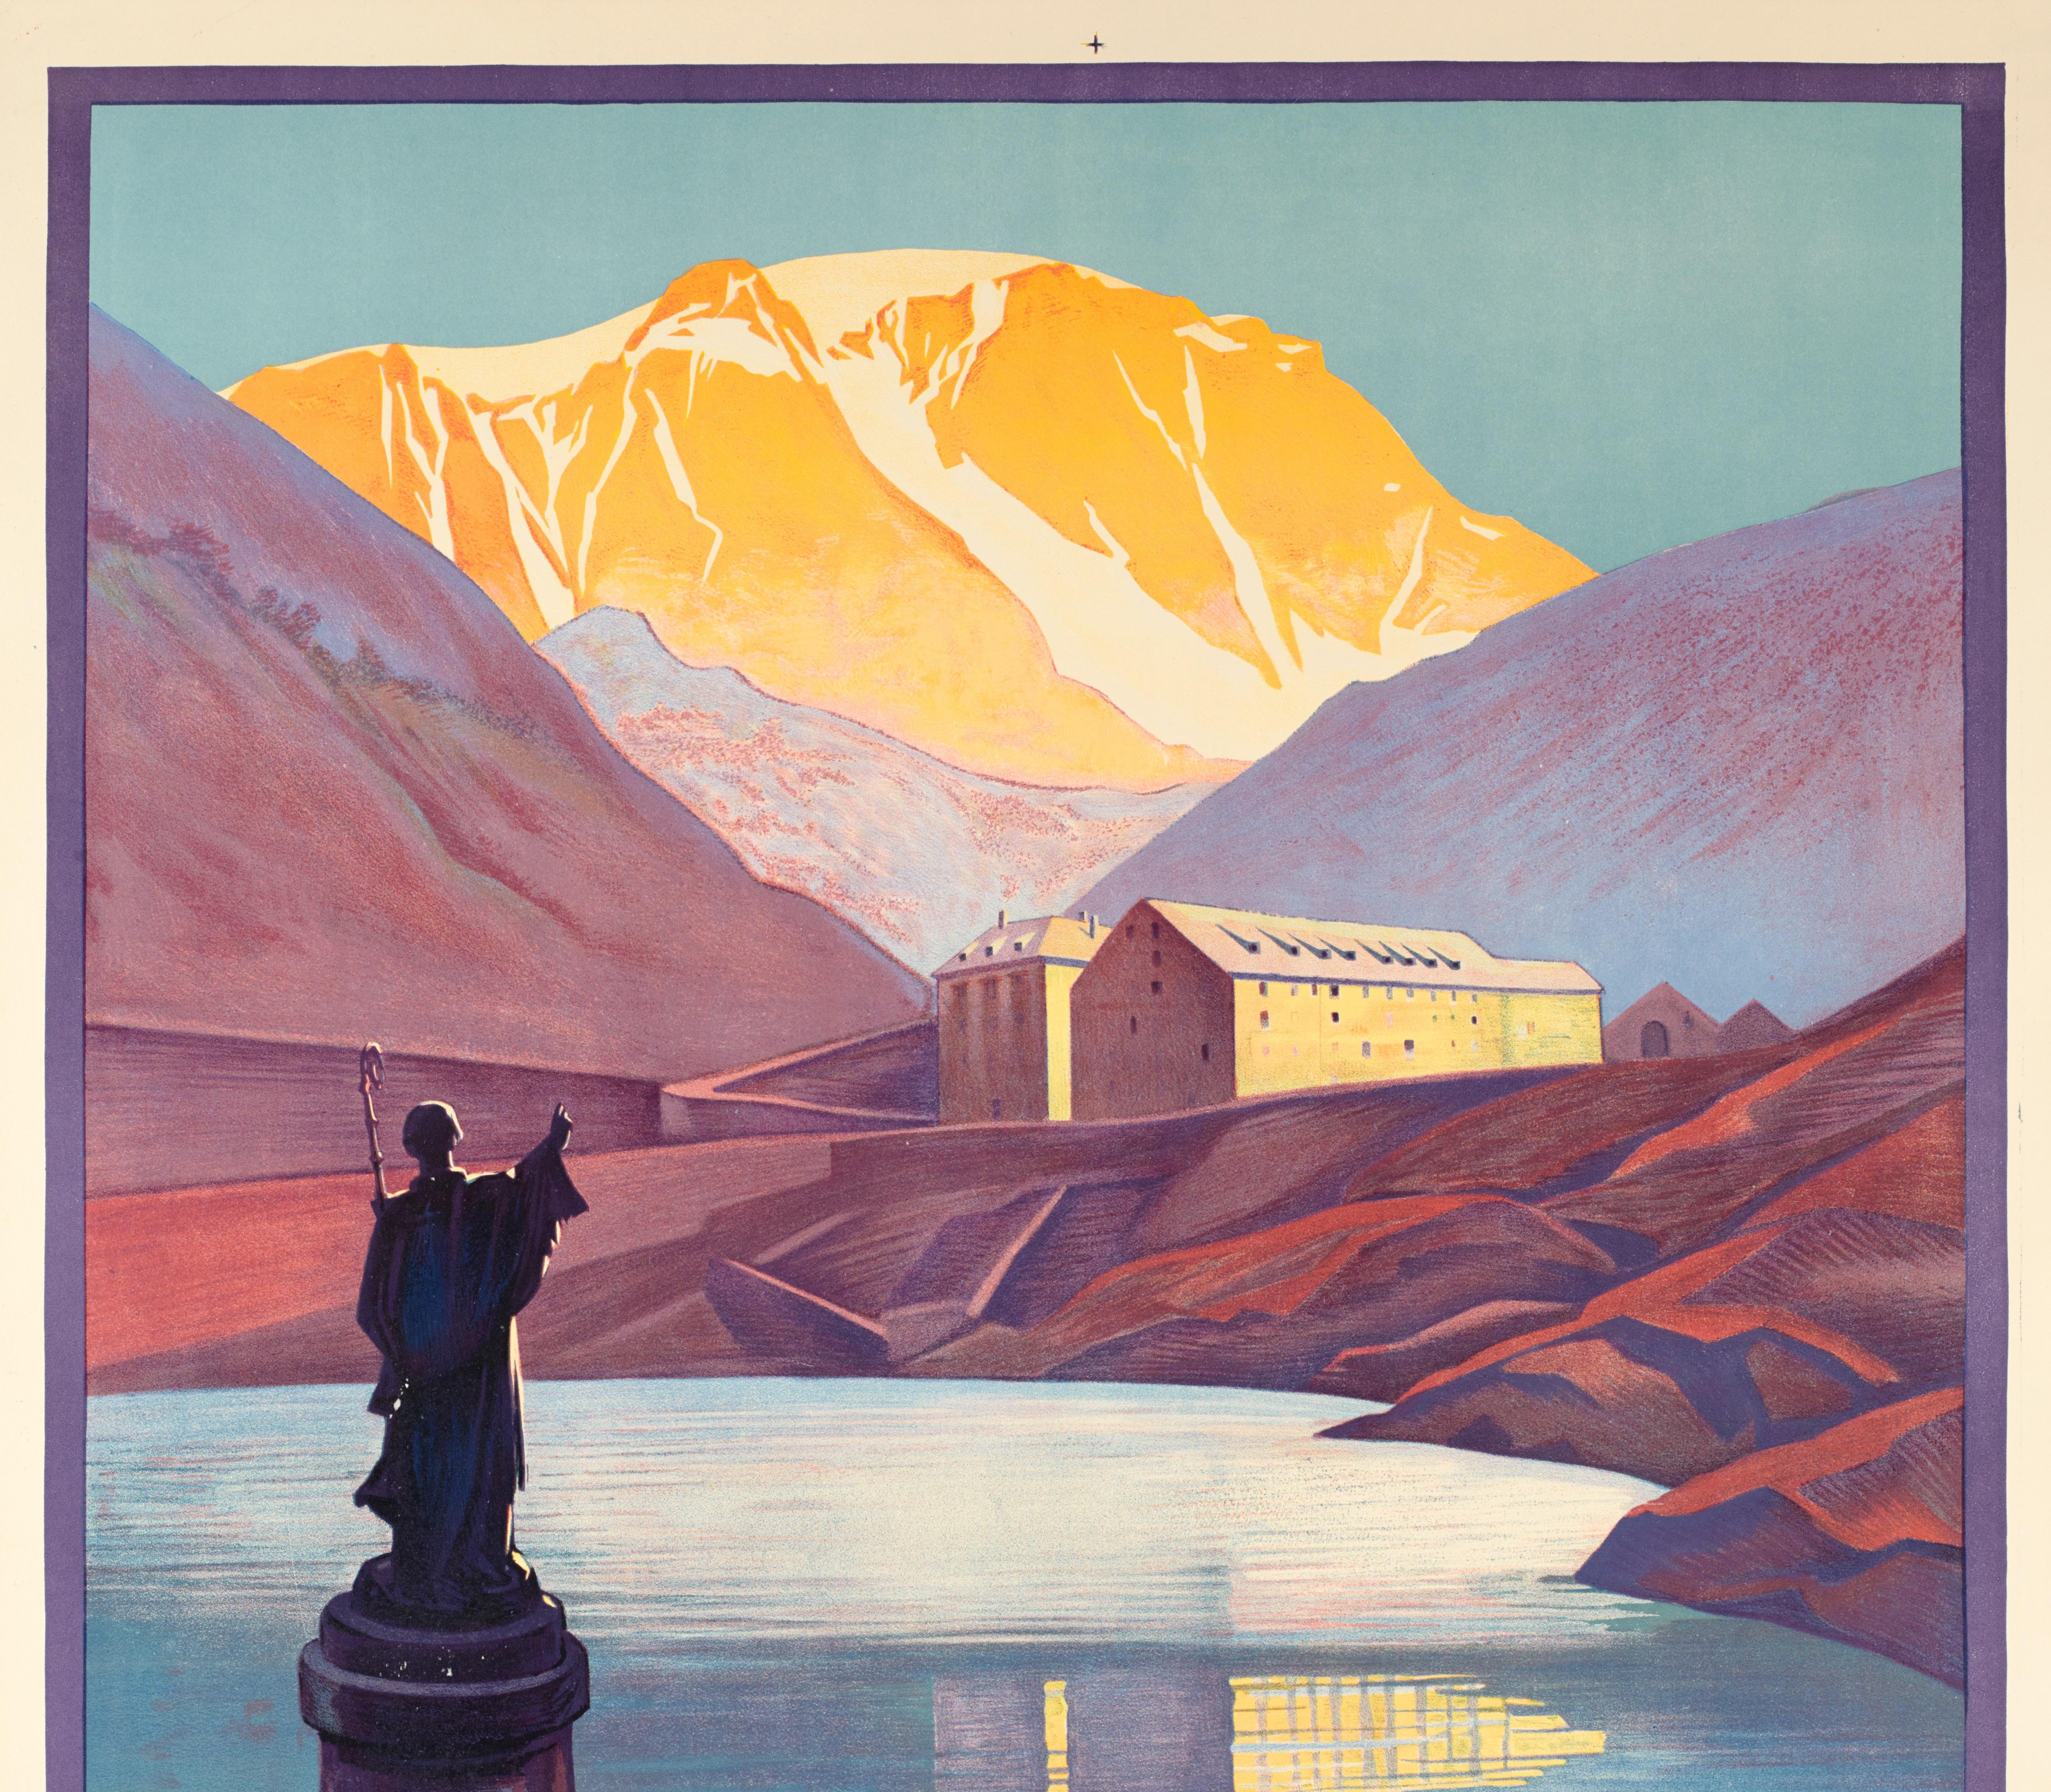 Original Vintage Poster from 1927 for Le col du Grand Saint-Bernard, Swiss Alpes, by Roger Broders.

Artist: Roger Broders (1883-1953)
Title: Col Du Grand St-Bernard
Date: 1927
Size: 30.3 x 42.1 in / 77 x 107 cm
Printer: LUCIEN SERRE, IMP. 19, Rue